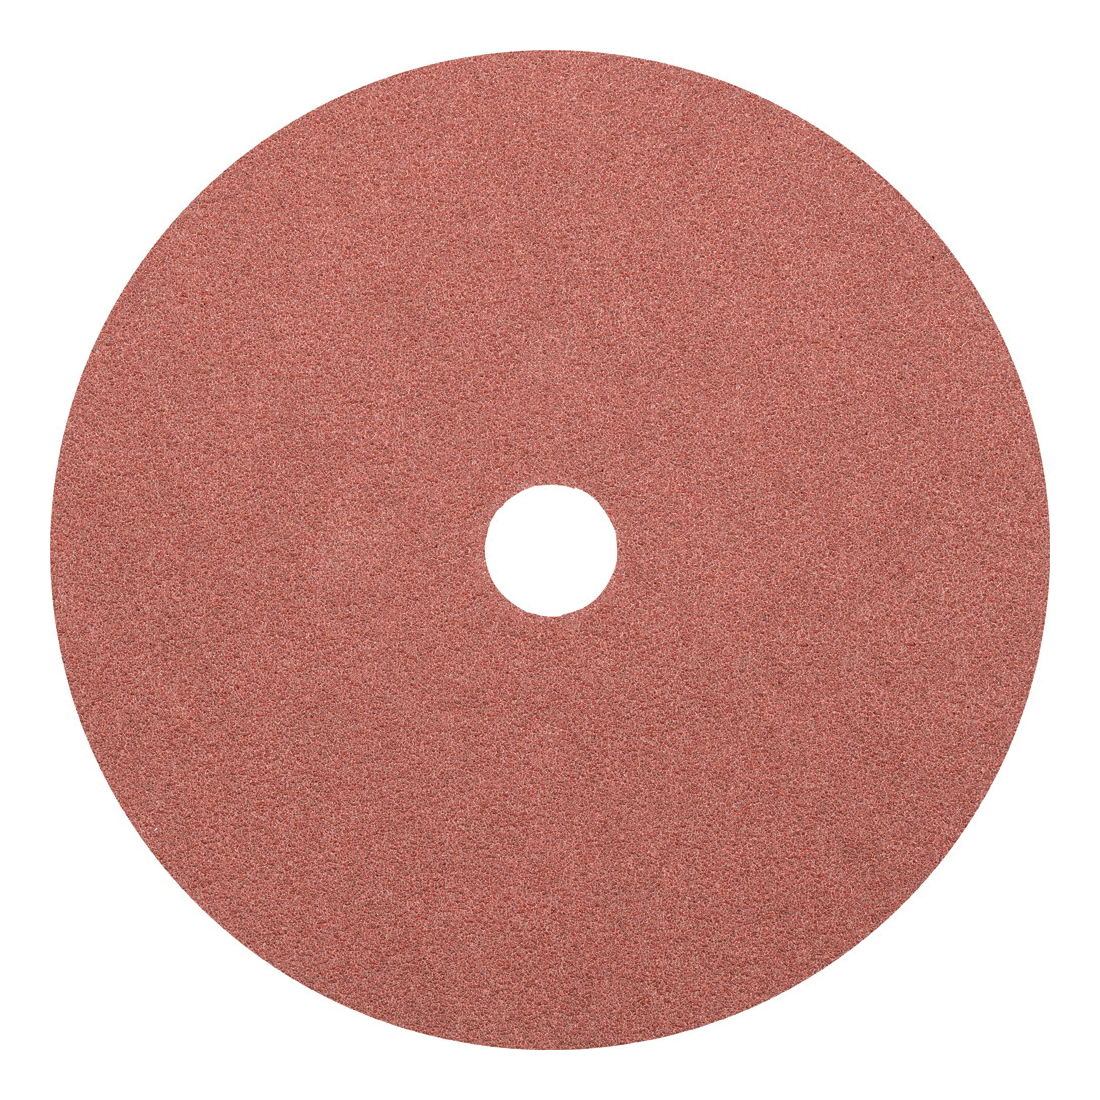 PFERD 62704 Standard Coated Abrasive Disc, 7 in Dia, 7/8 in Center Hole, 50 Grit, Aluminum Oxide Abrasive, Arbor Attachment